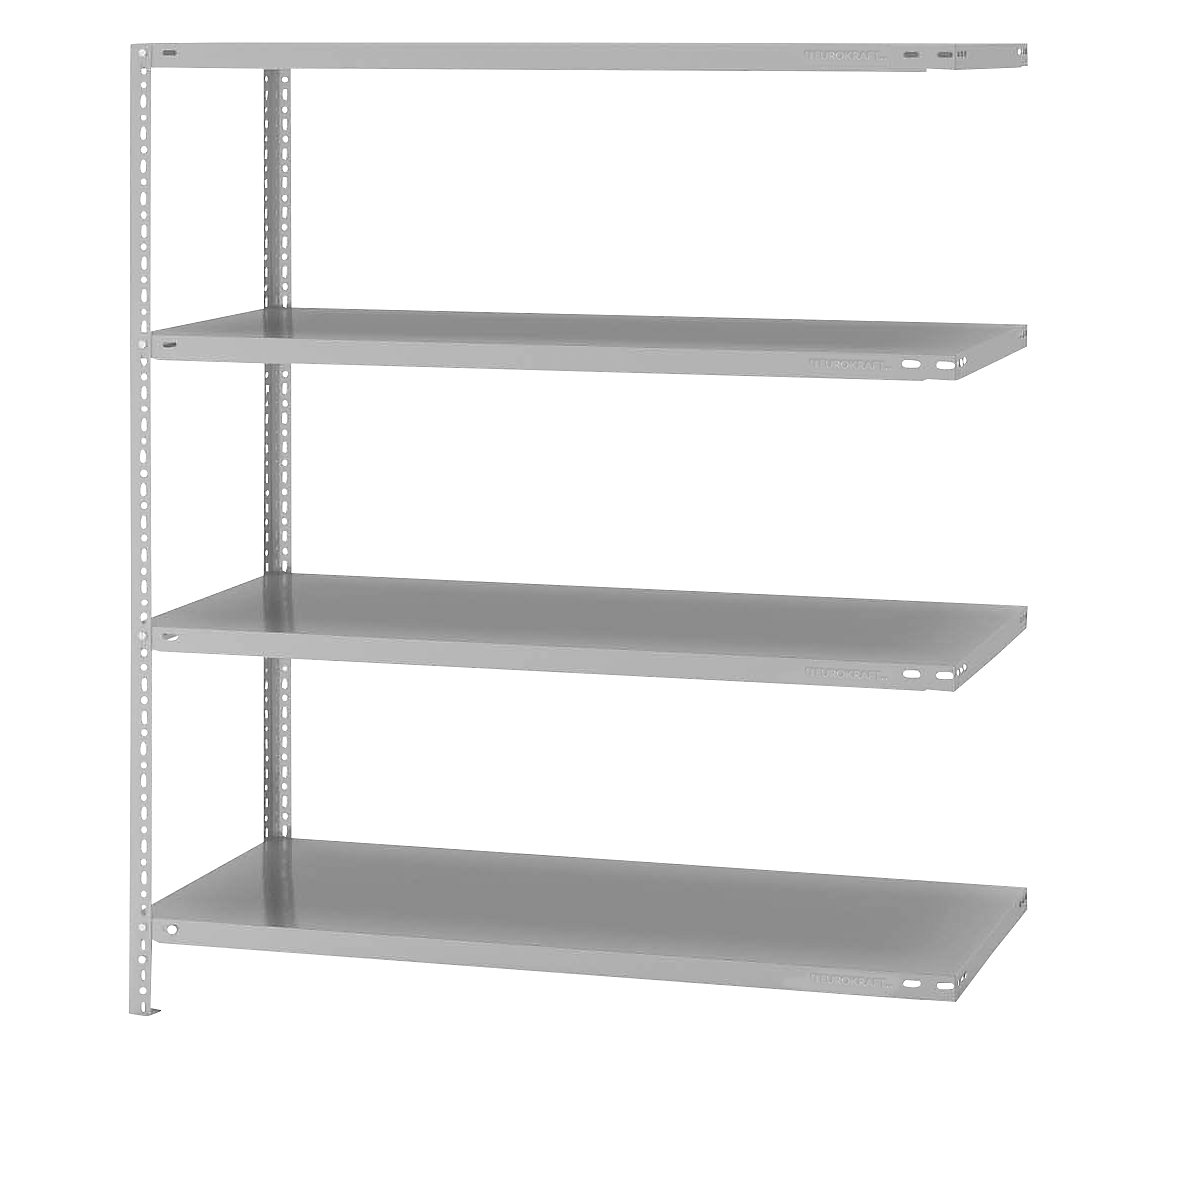 Bolt-together storage shelving, RAL 7035, medium duty – eurokraft pro, shelf unit height 1500 mm, shelf width 1300 mm, depth 600 mm, extension shelf unit-4